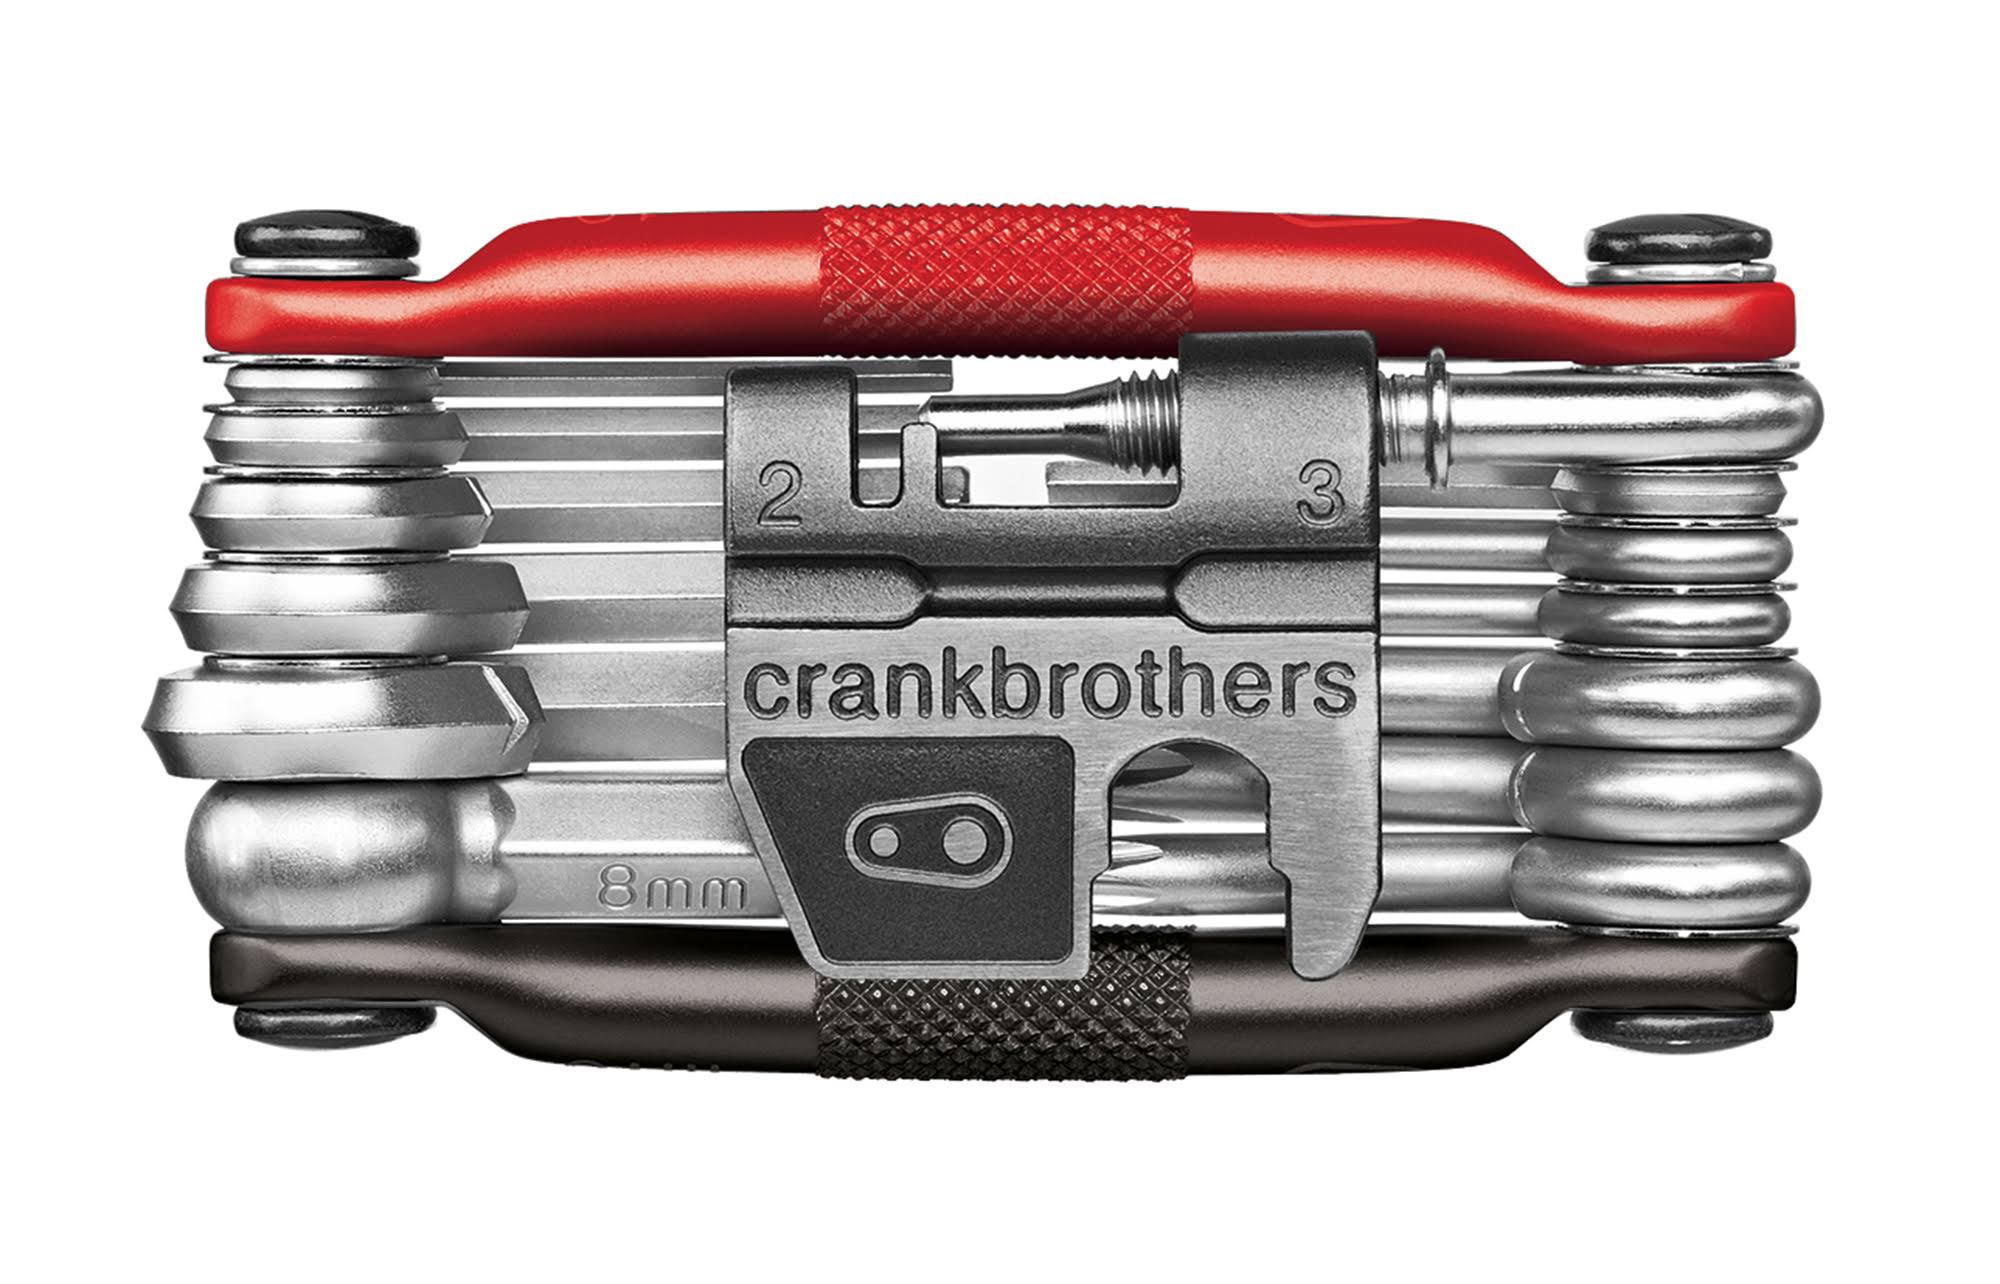 Crank Brothers Multi 19 Tool - Gray